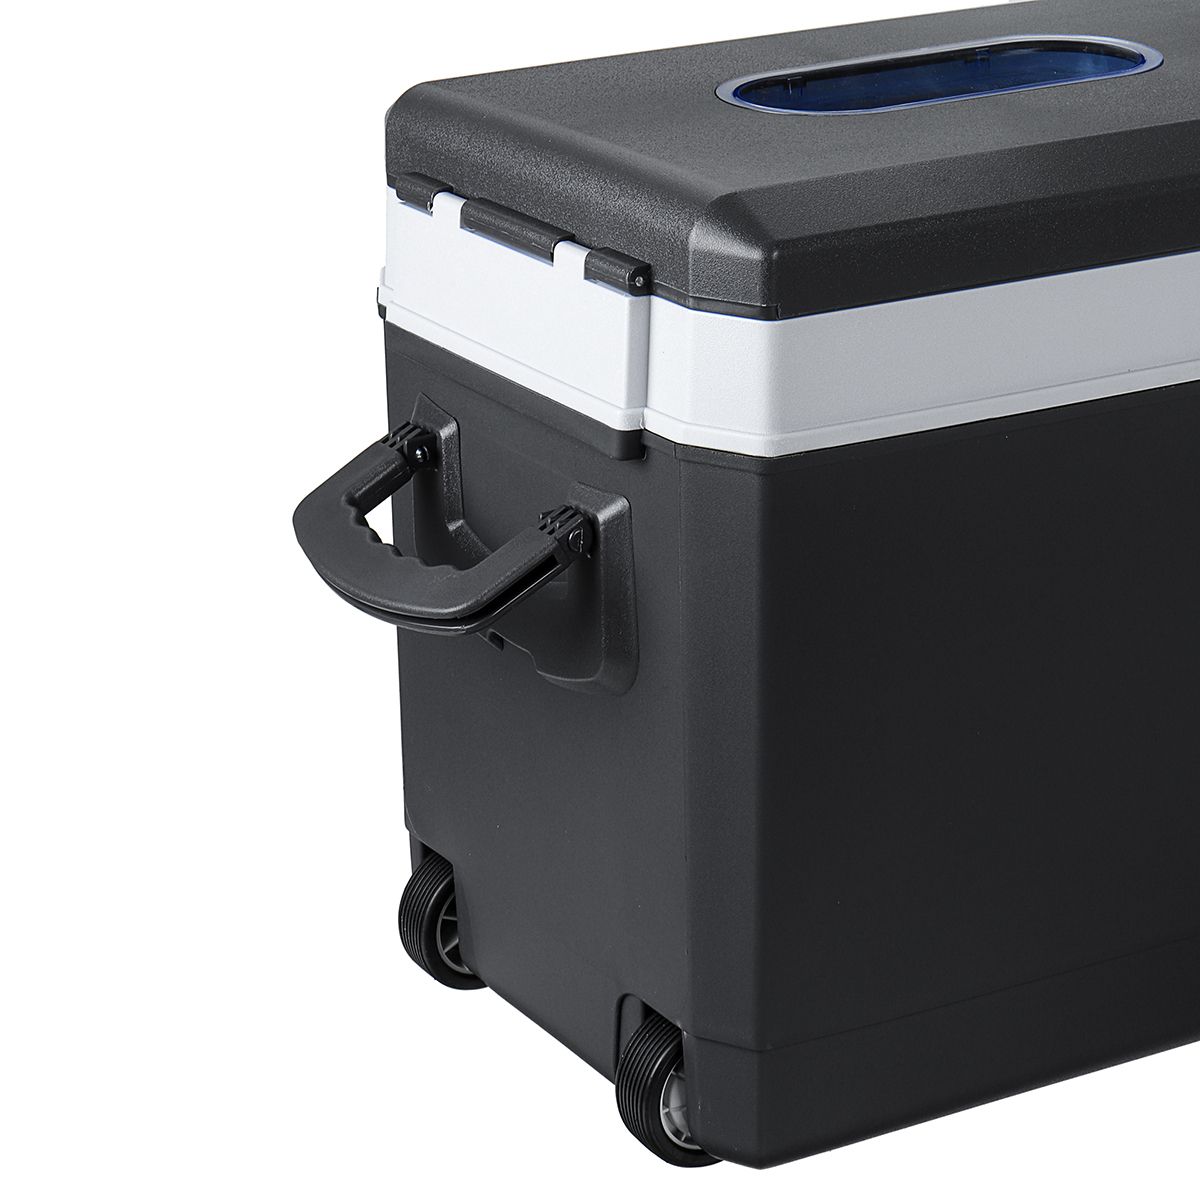 35L-Portable-Freezer-Fridge-Car-Boat-Caravan-Home-Cooler-Refrigerator-AU-Plug-1591326